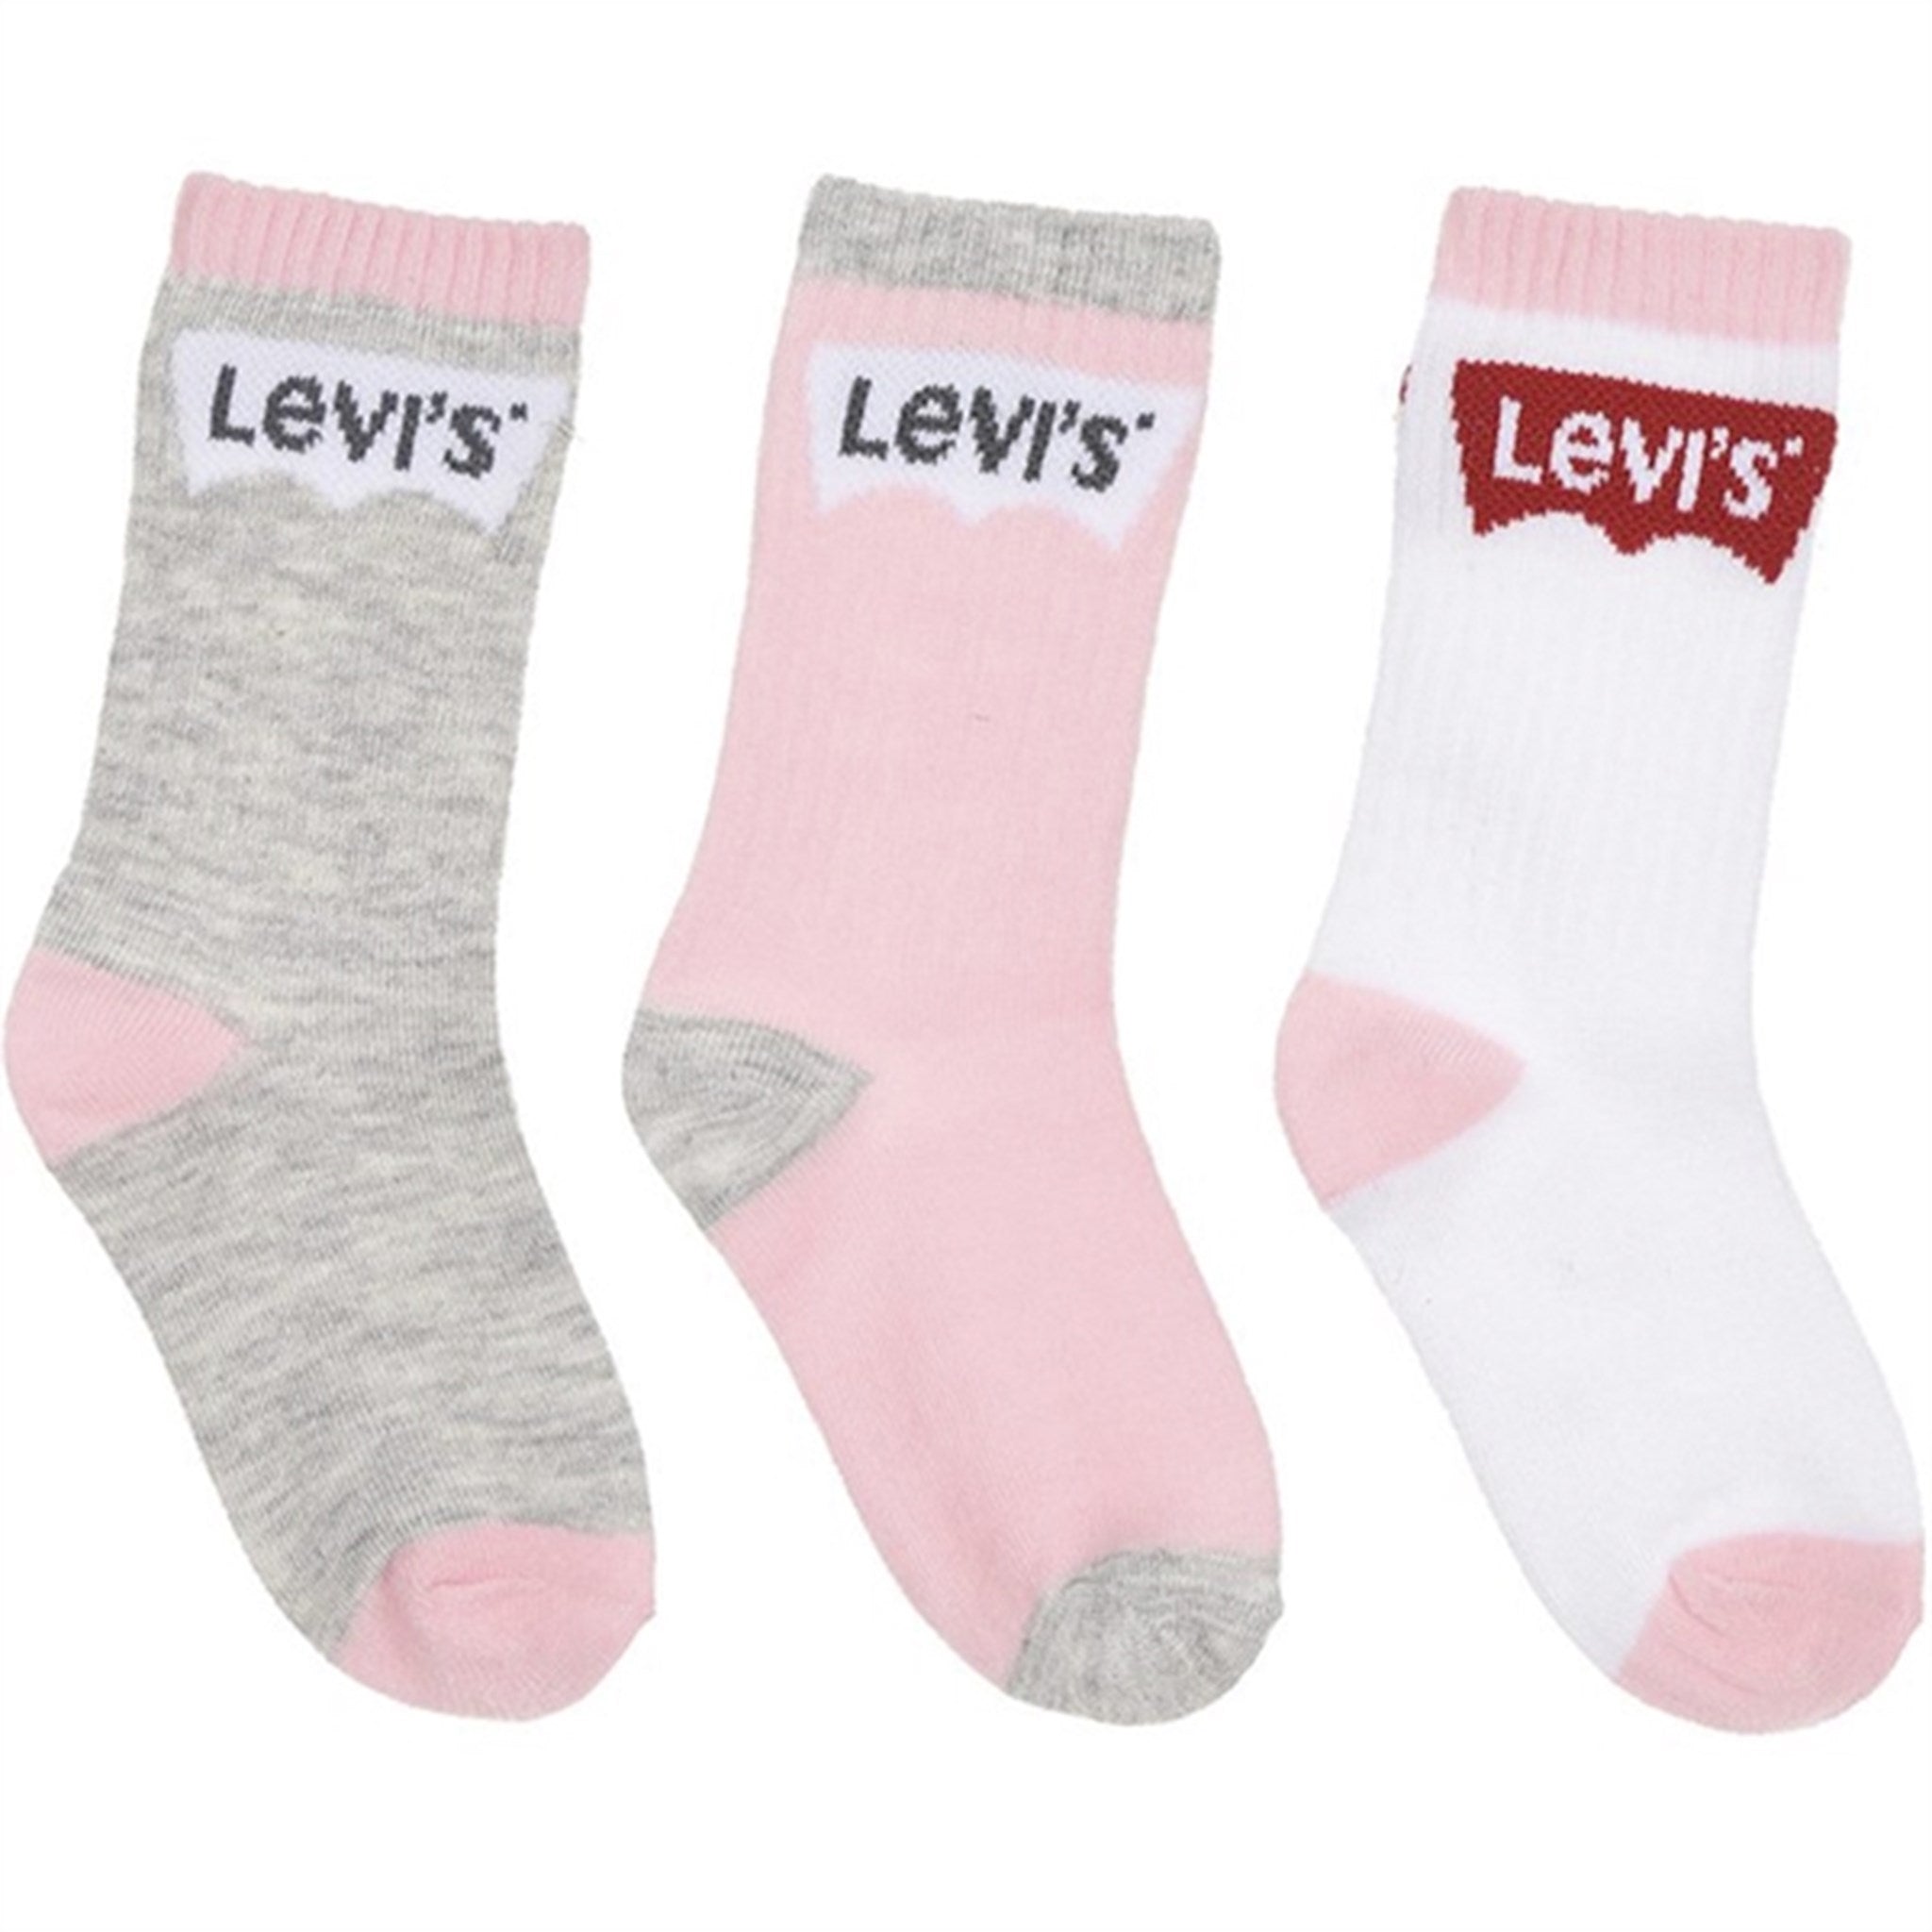 Levi's Crew Socks Fairy Tale